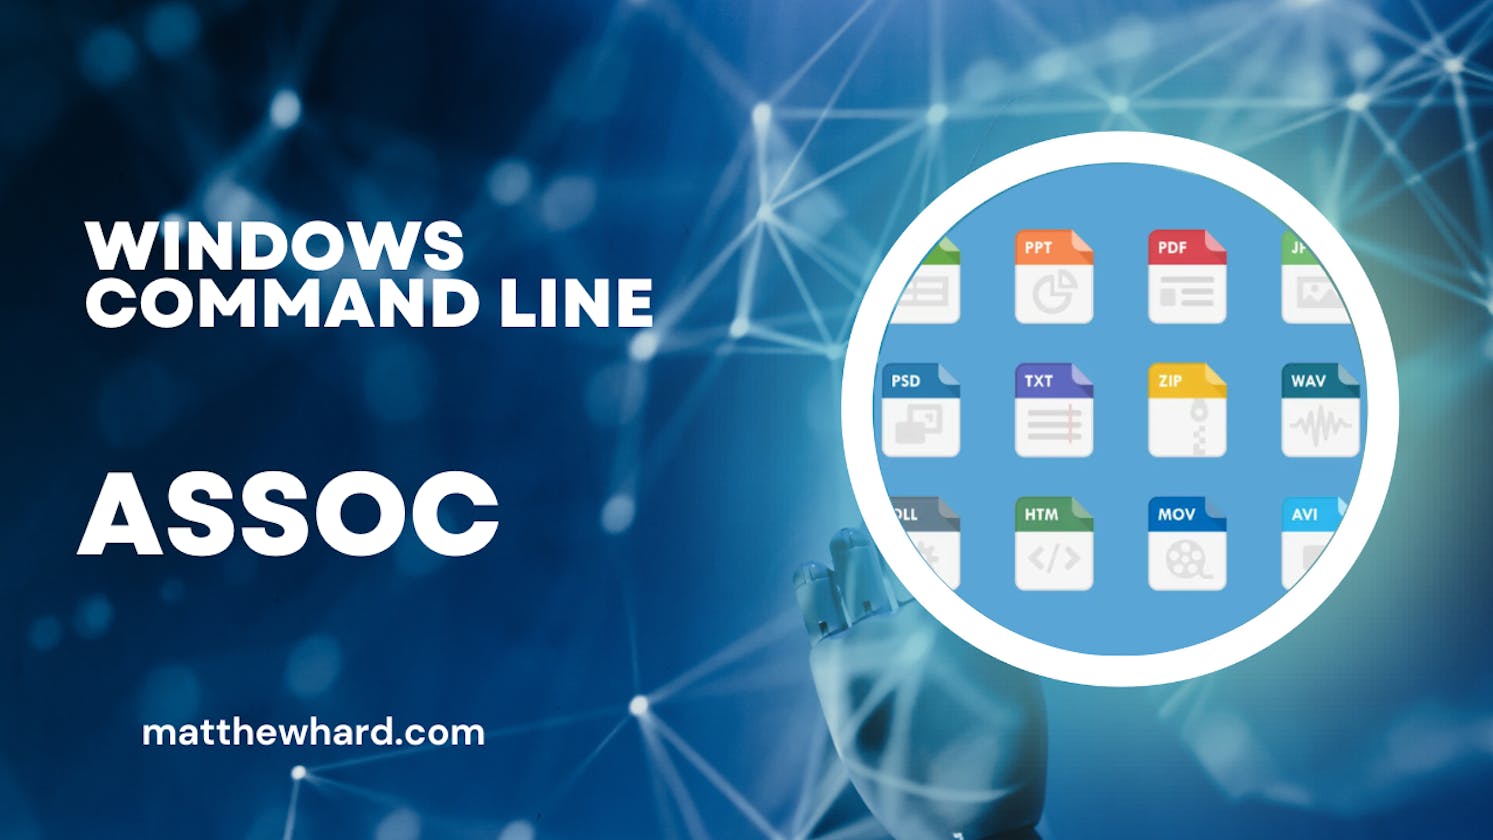 Windows Command Line: The ASSOC Command